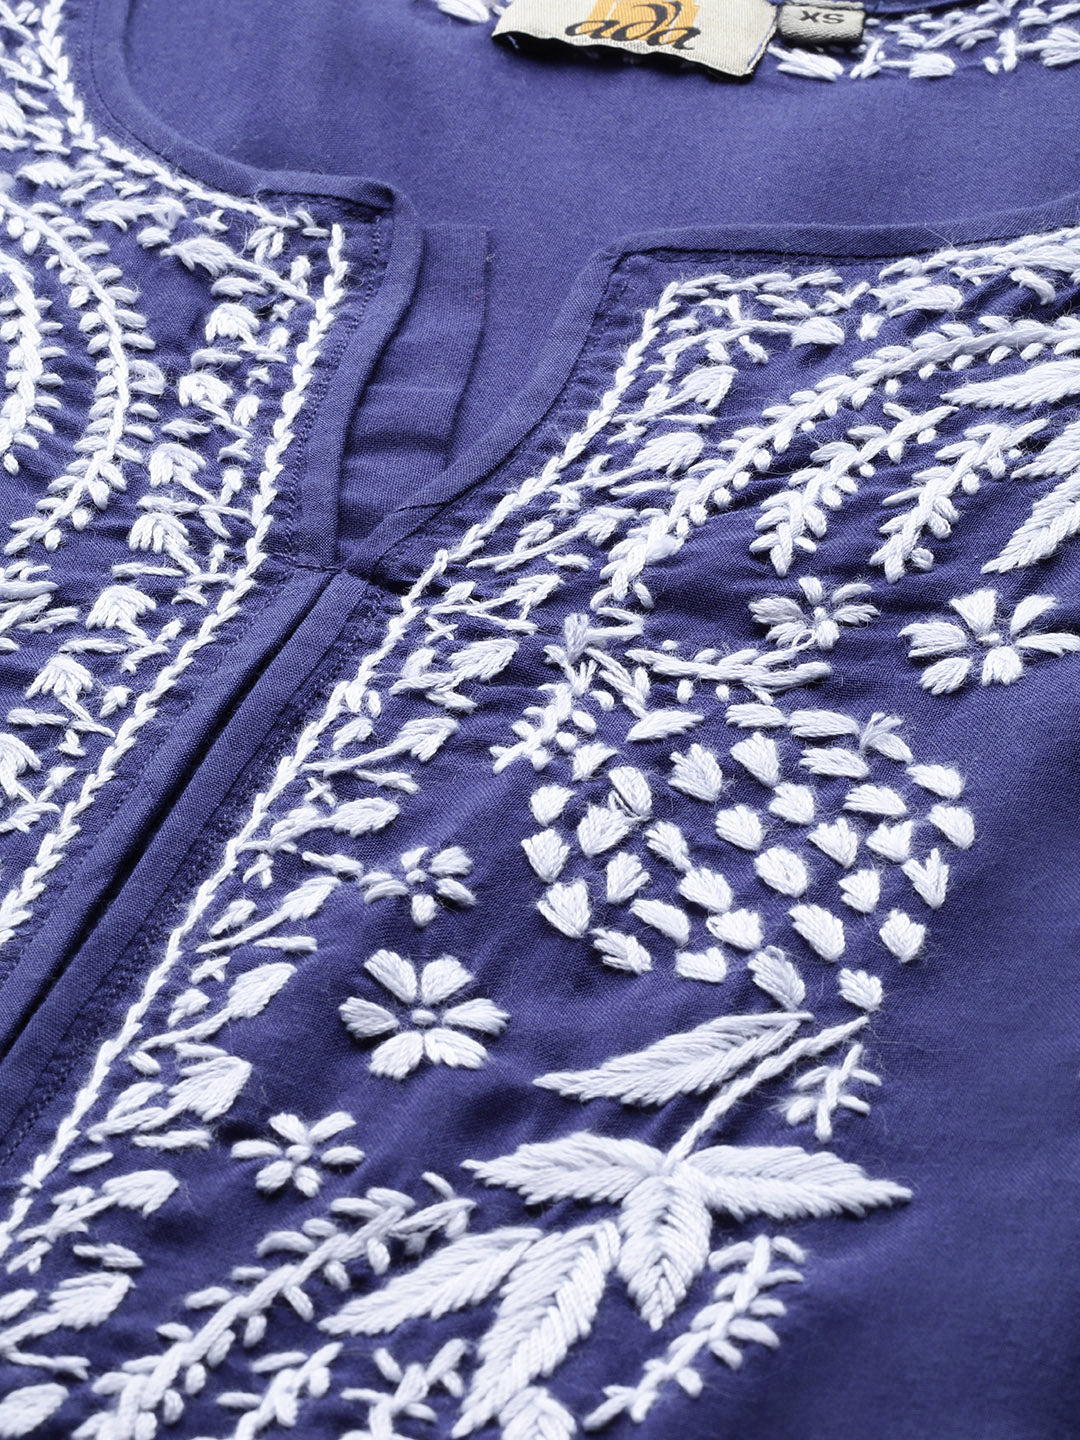 Lucknowi Chikankari Royal Blue Cotton Kurta